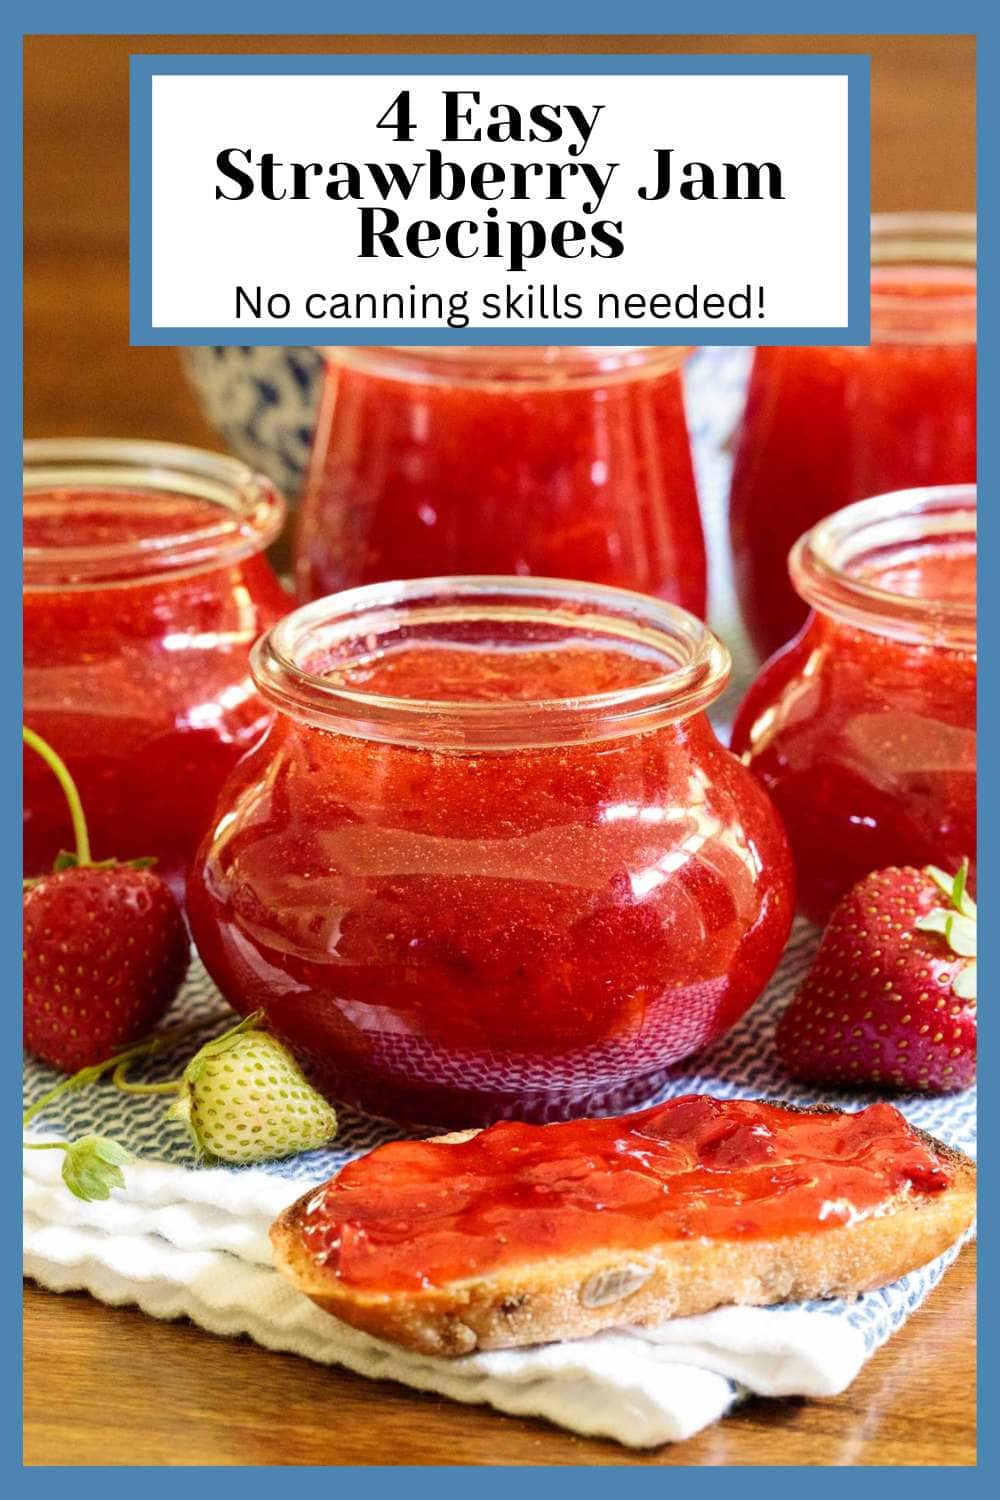 4 Easy Strawberry Jam Recipes - No Canning Skills Needed!